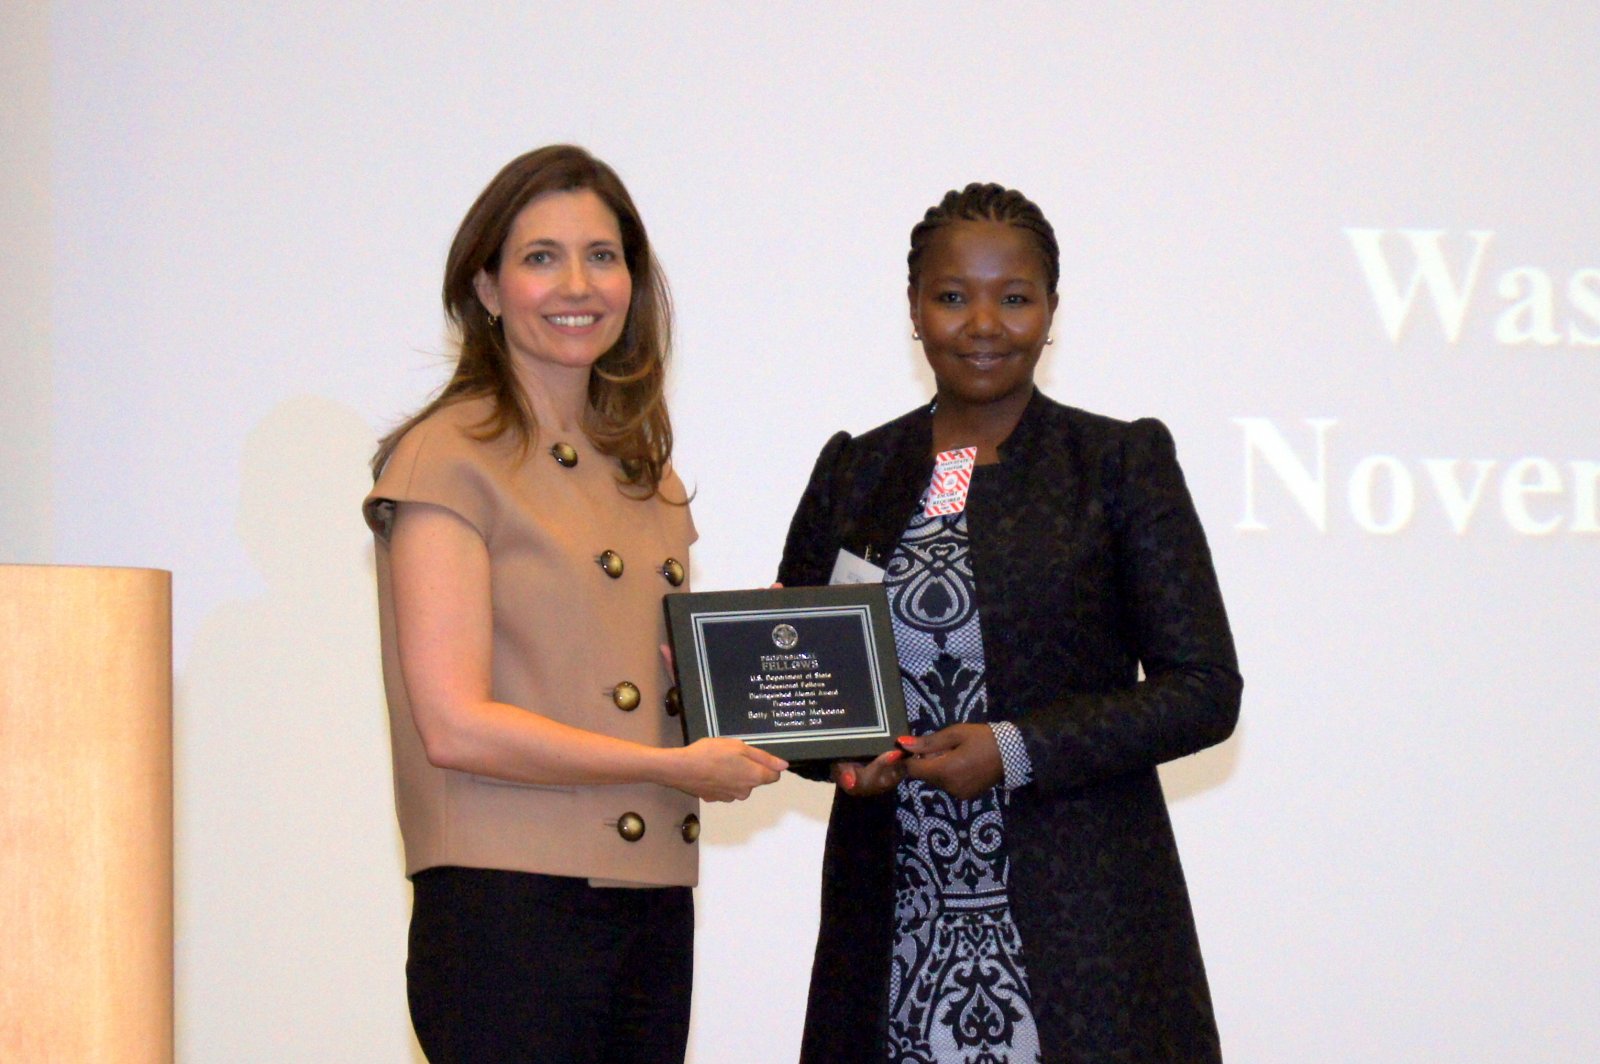 Receiving the Legislative Fellows Program Distinguish Impact award for 2013.